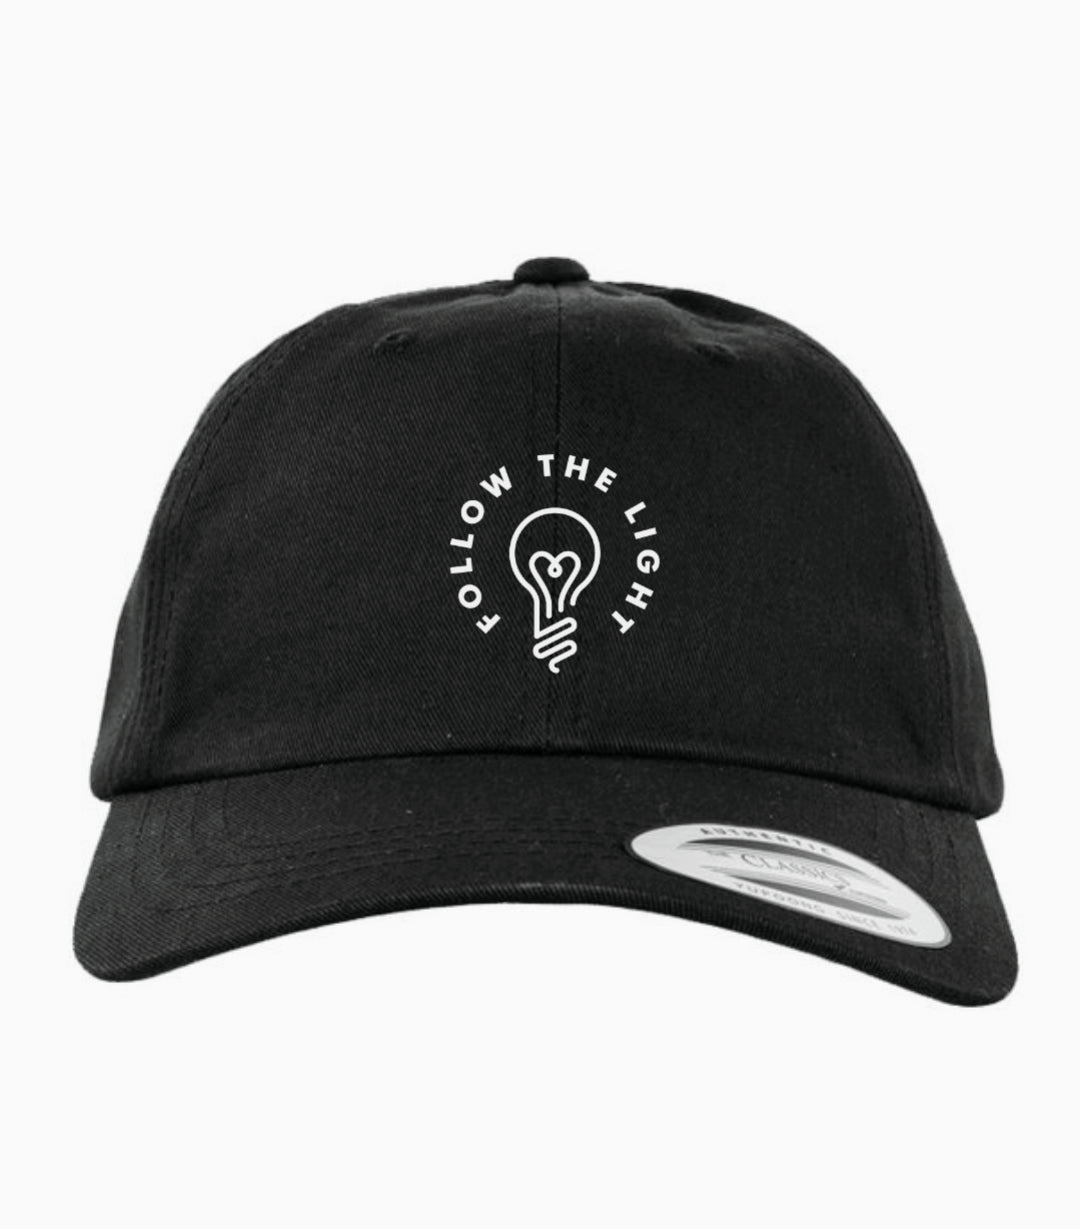 Follow The Light - Dad Hat (Black)